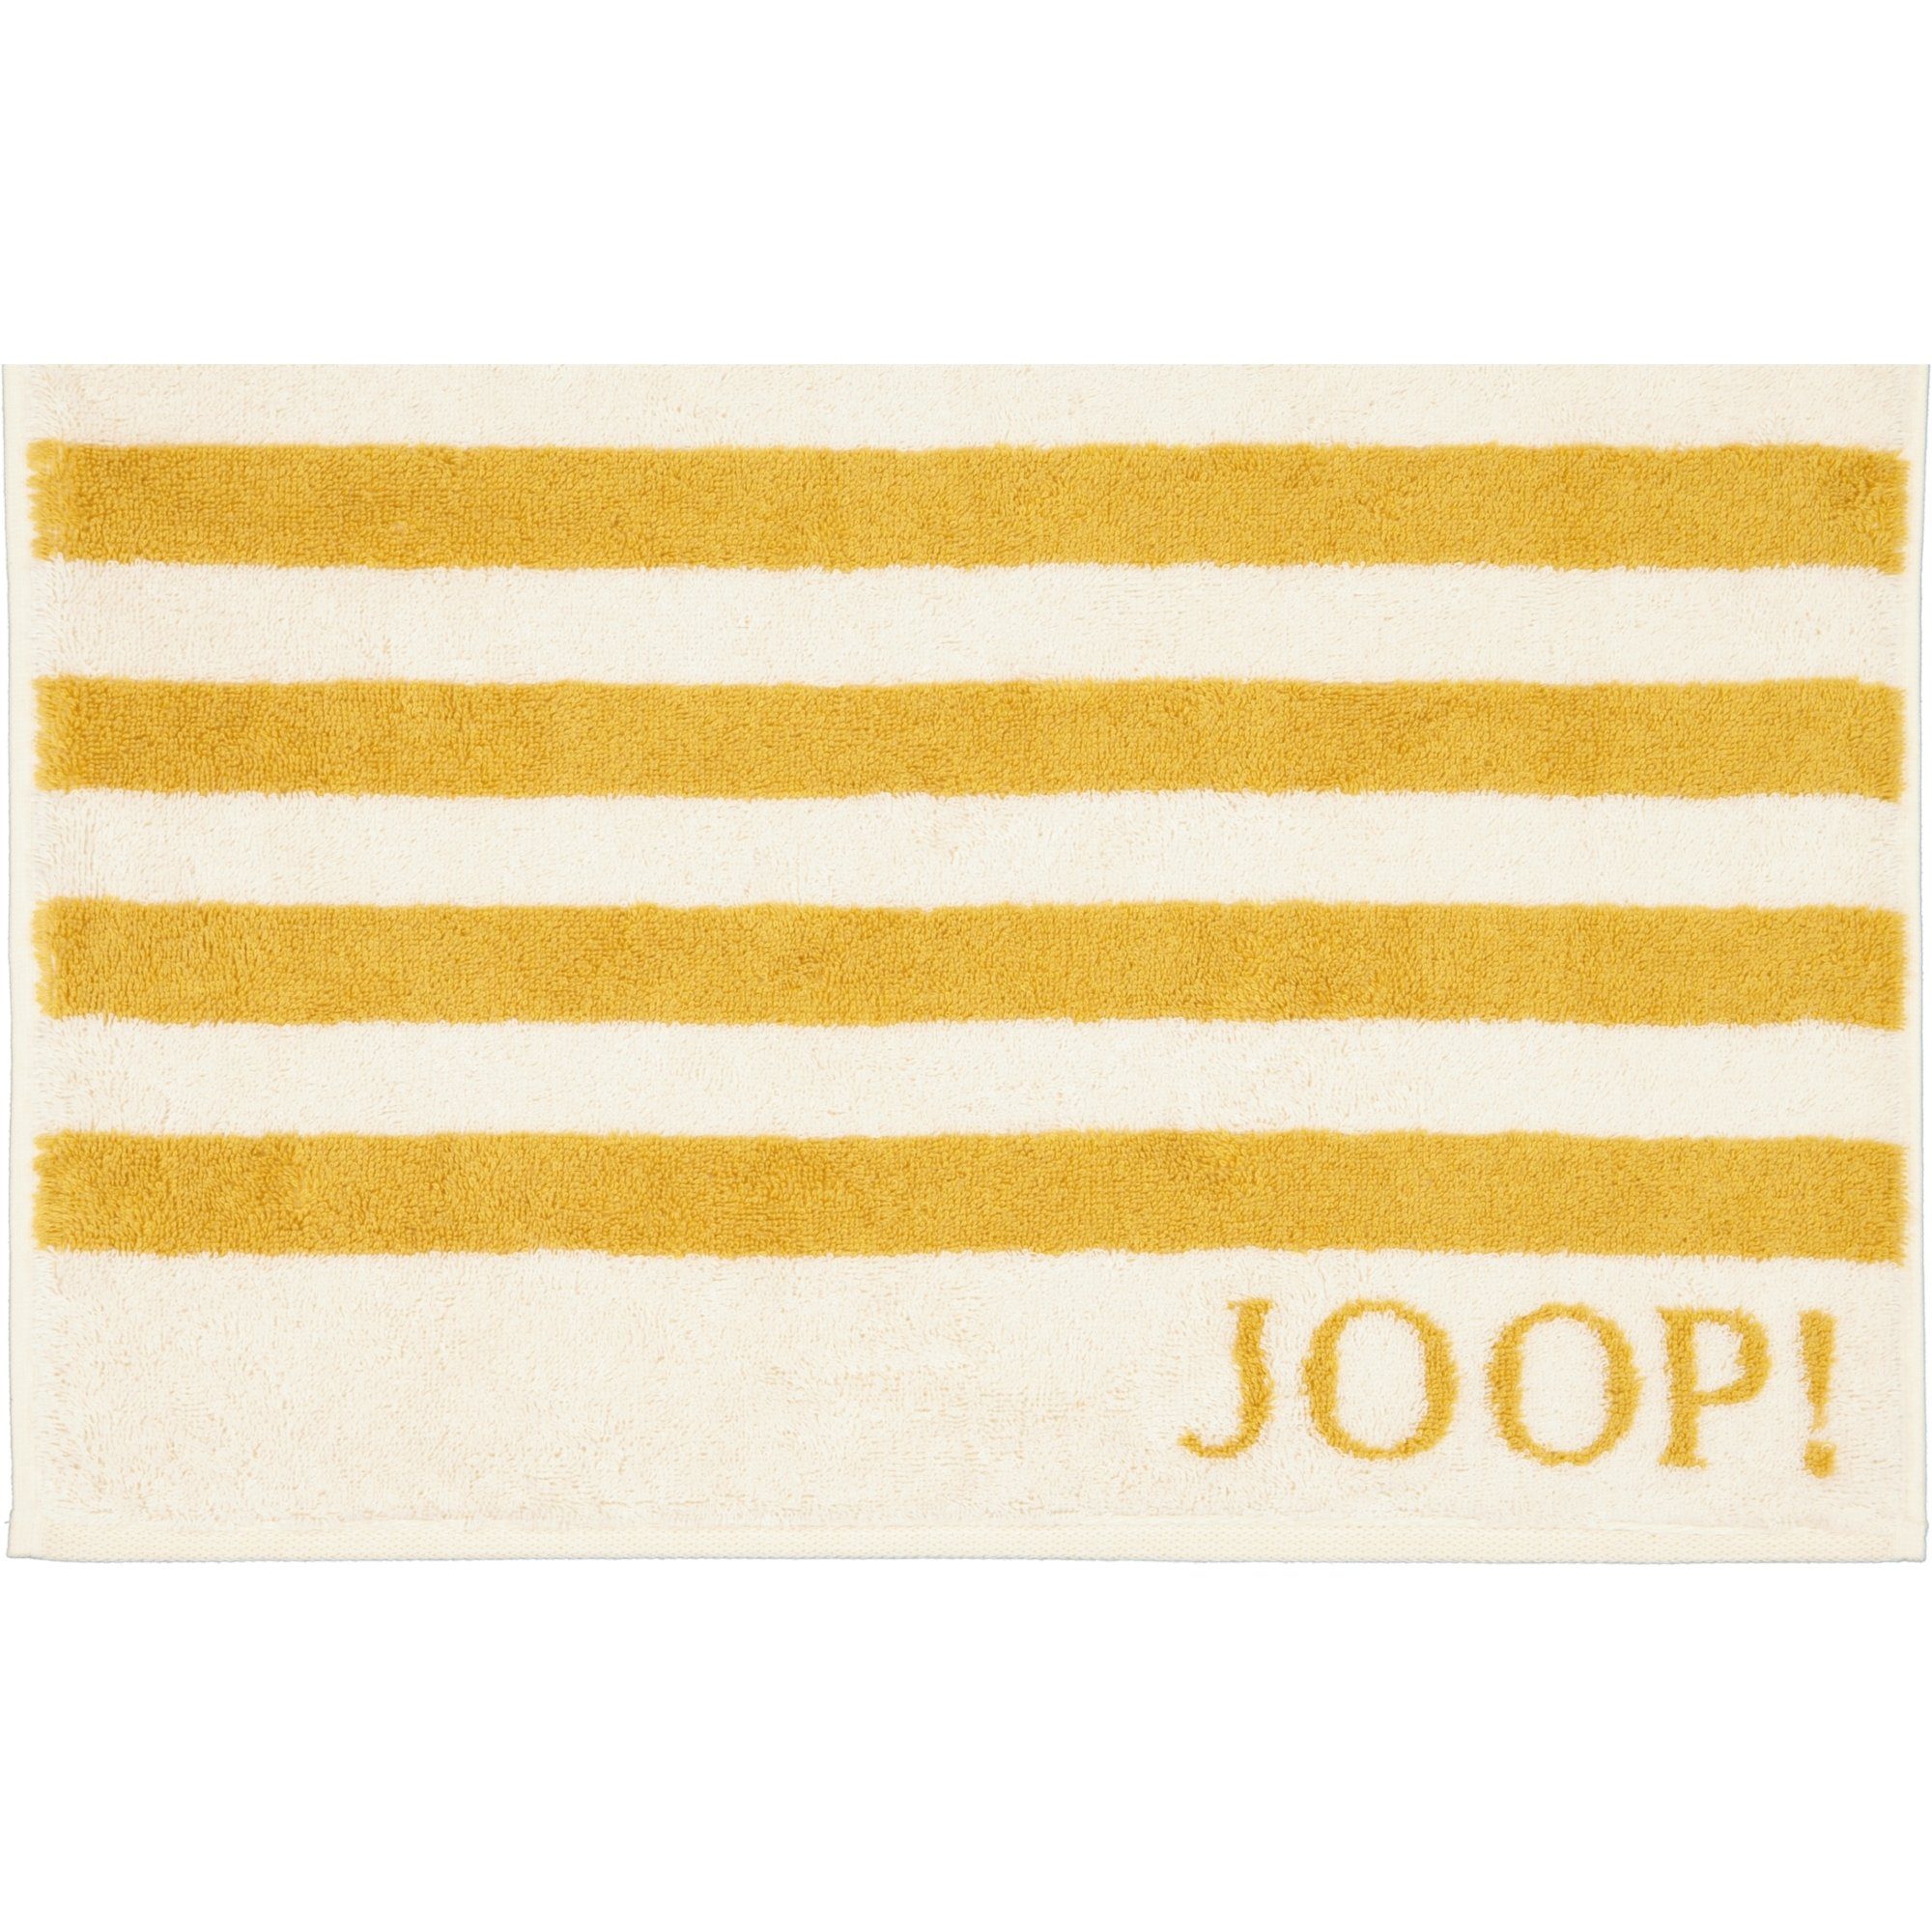 Ocker Stripes Handtücher 100% Classic Baumwolle 1610, Joop!